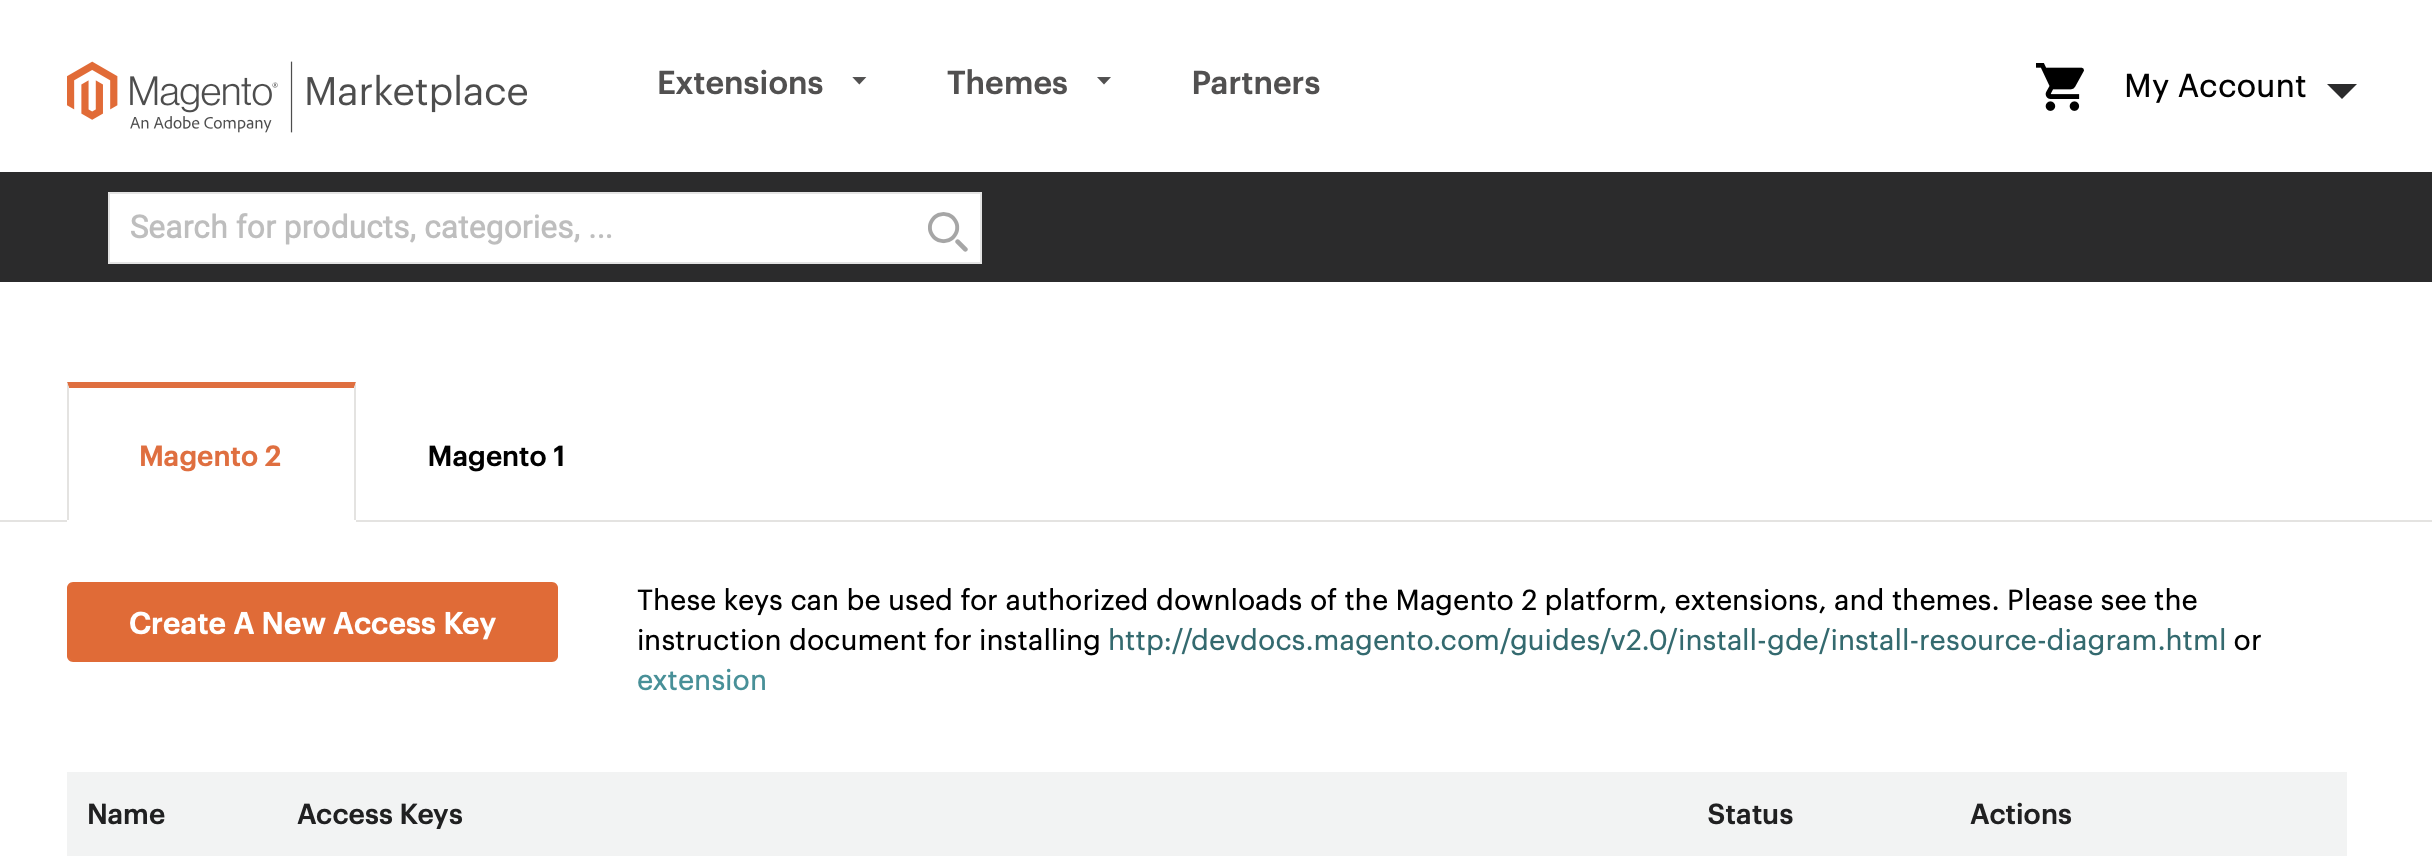 Magento Marketplace - Create a New Access Key